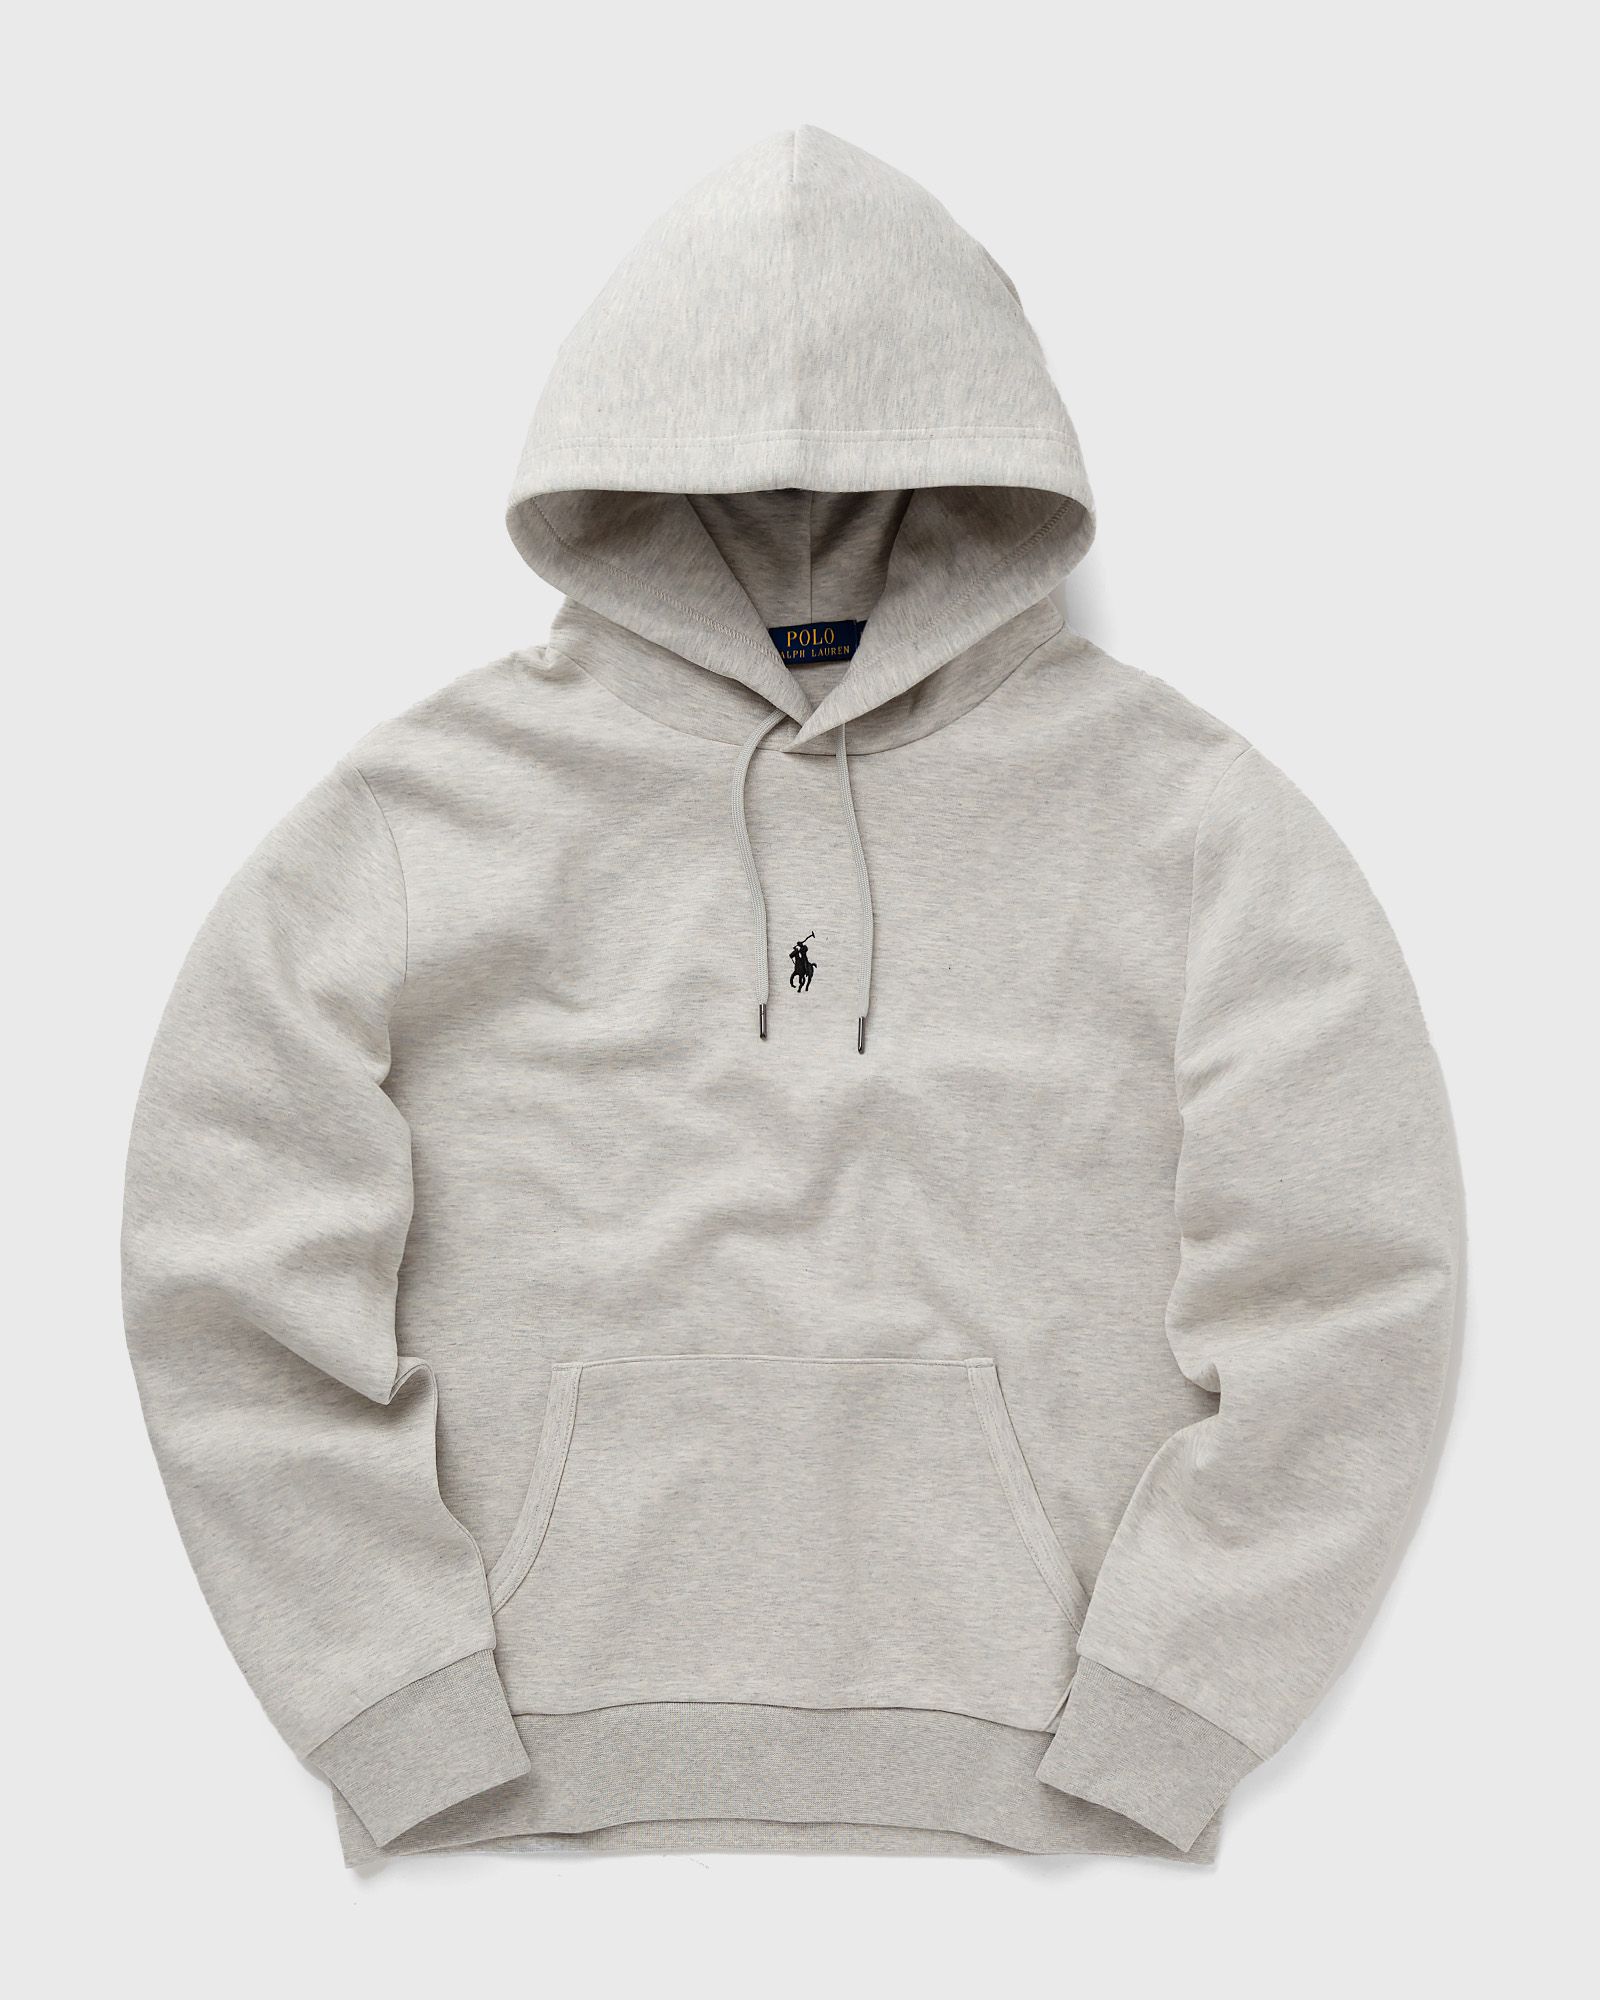 Polo Ralph Lauren - long sleeve-sweatshirt men hoodies grey in größe:xxl